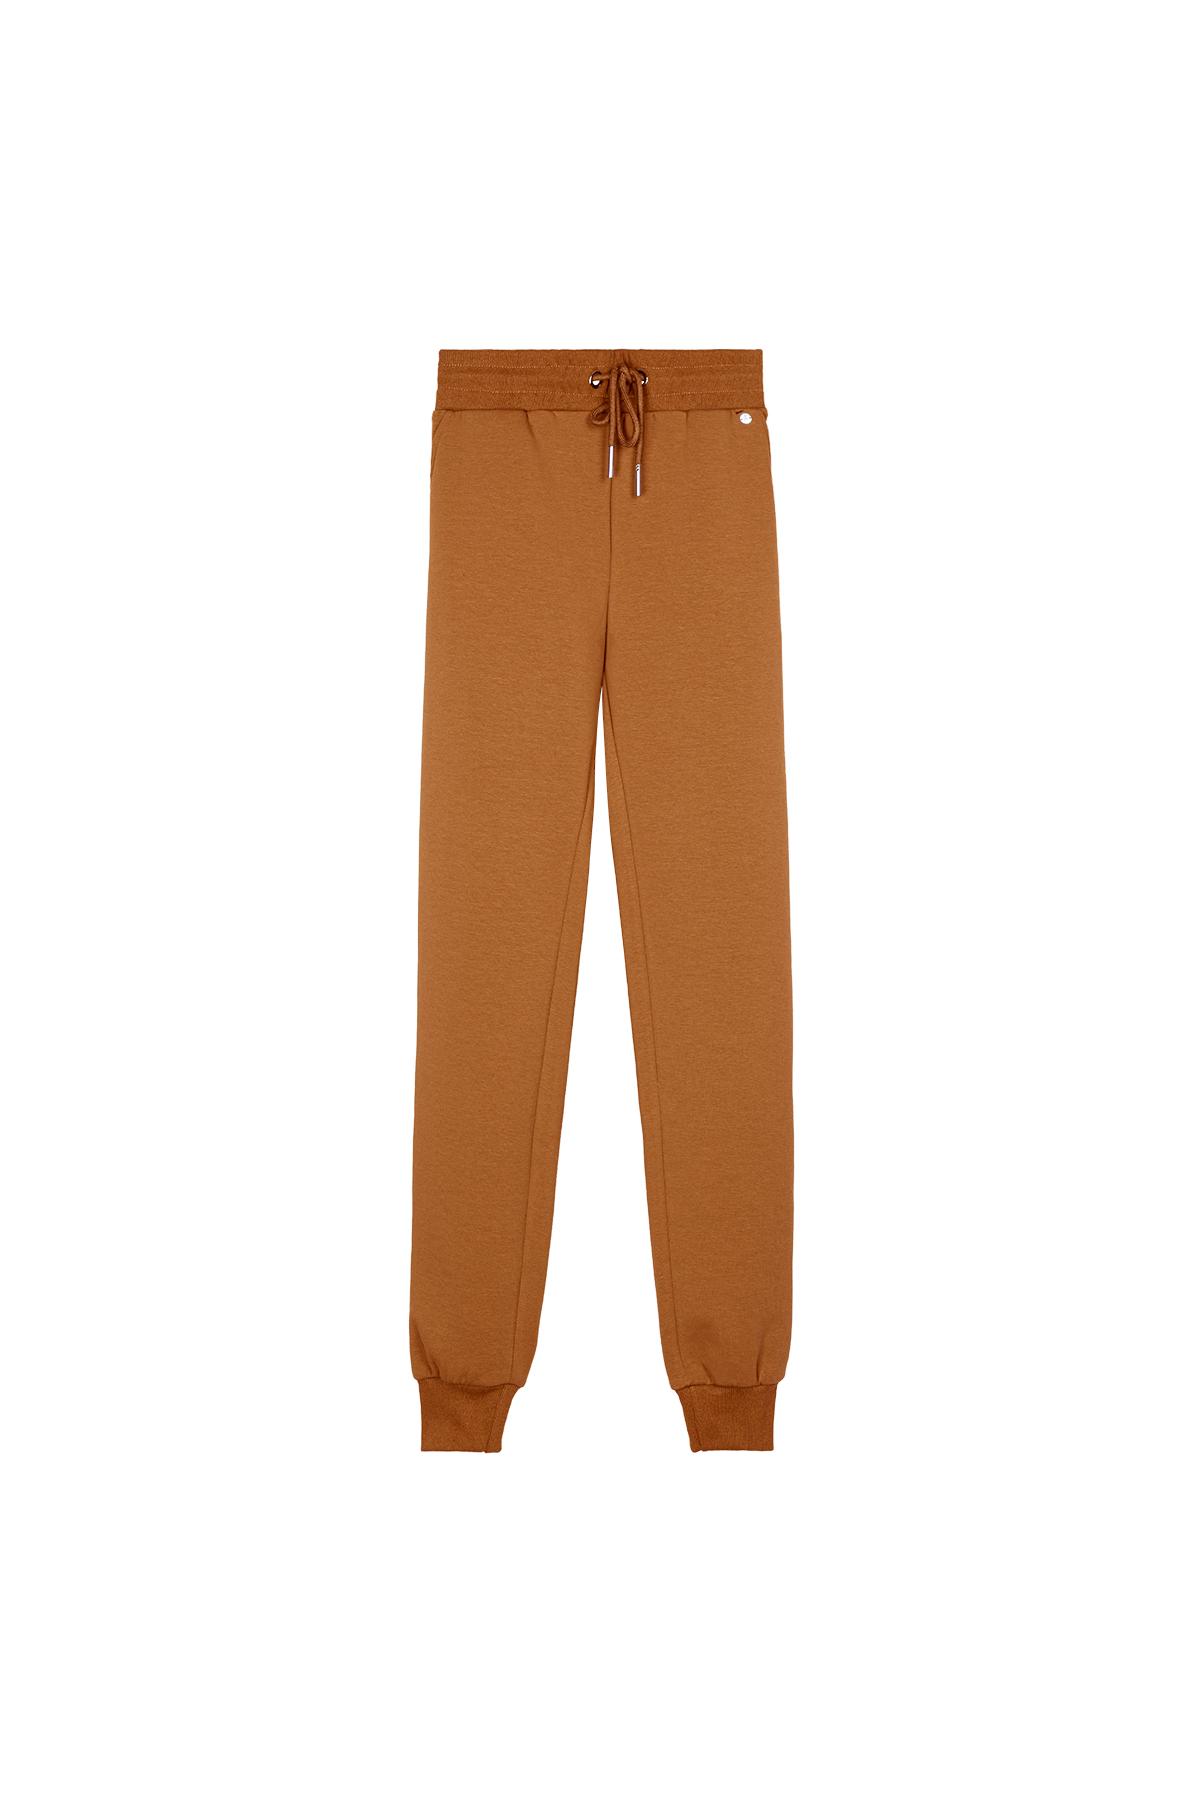 Comy Hosen Loungewear Orange S